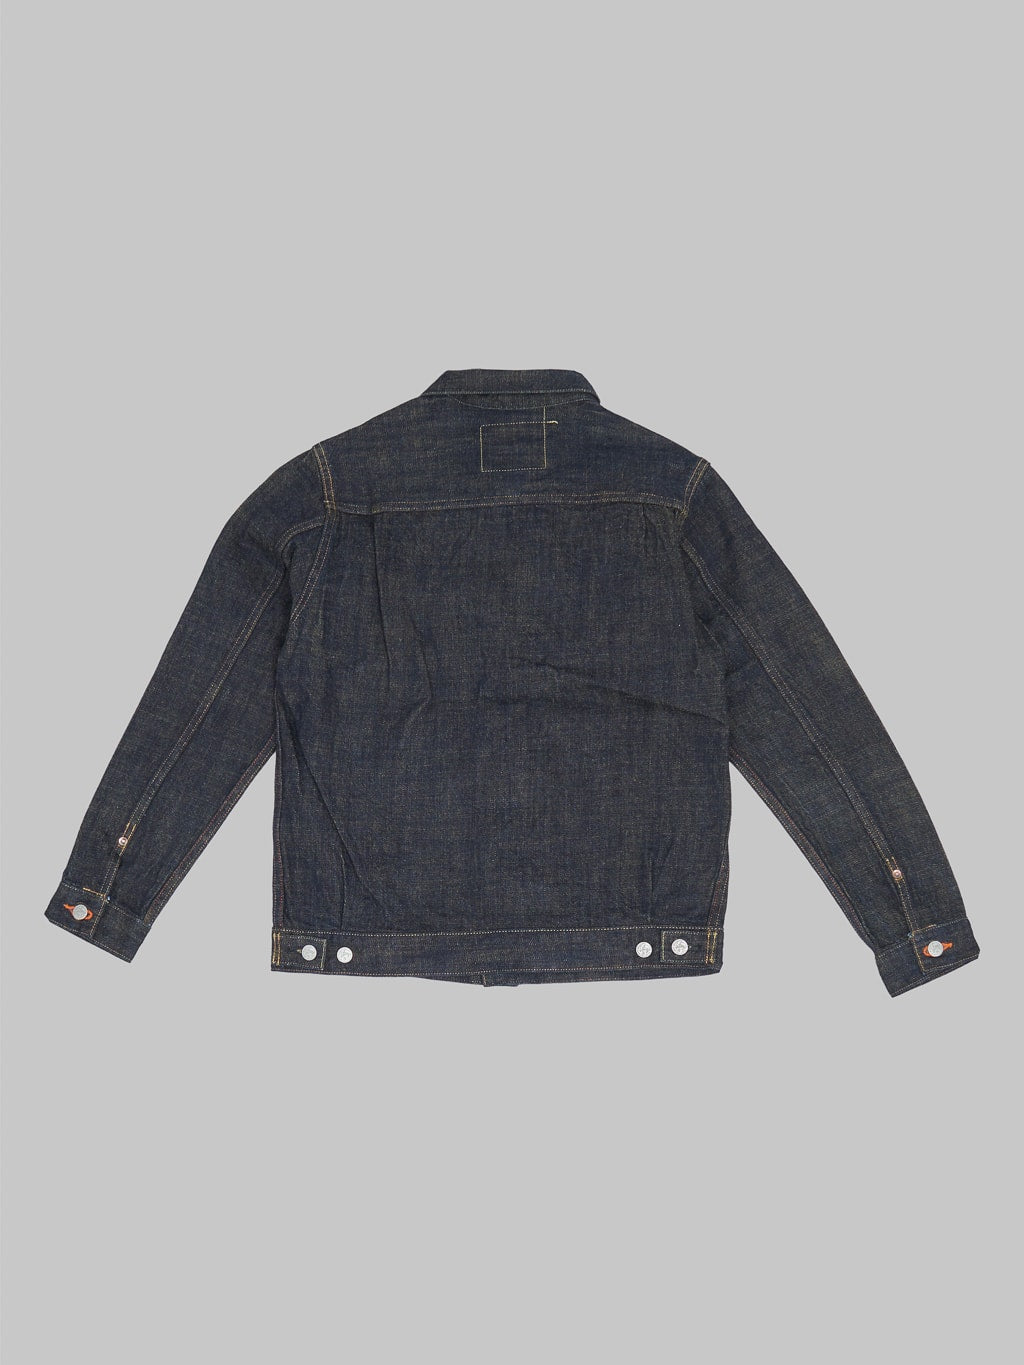 Tanuki soga selvedge denim type II jacket back view